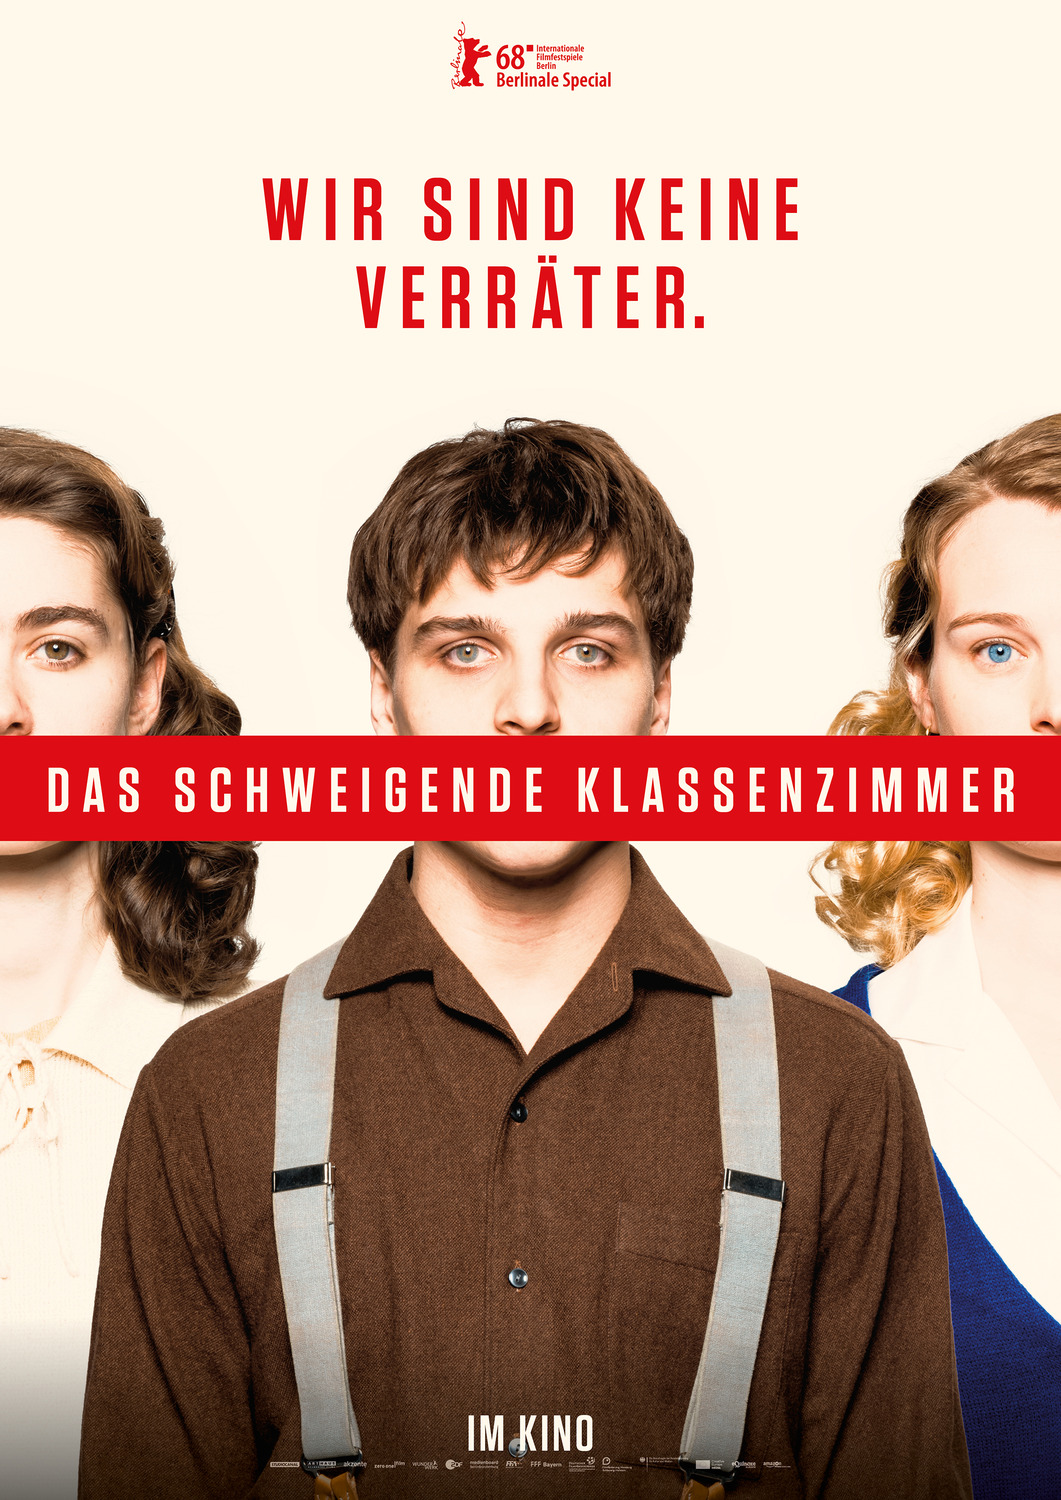 Extra Large Movie Poster Image for Das schweigende Klassenzimmer (#6 of 7)